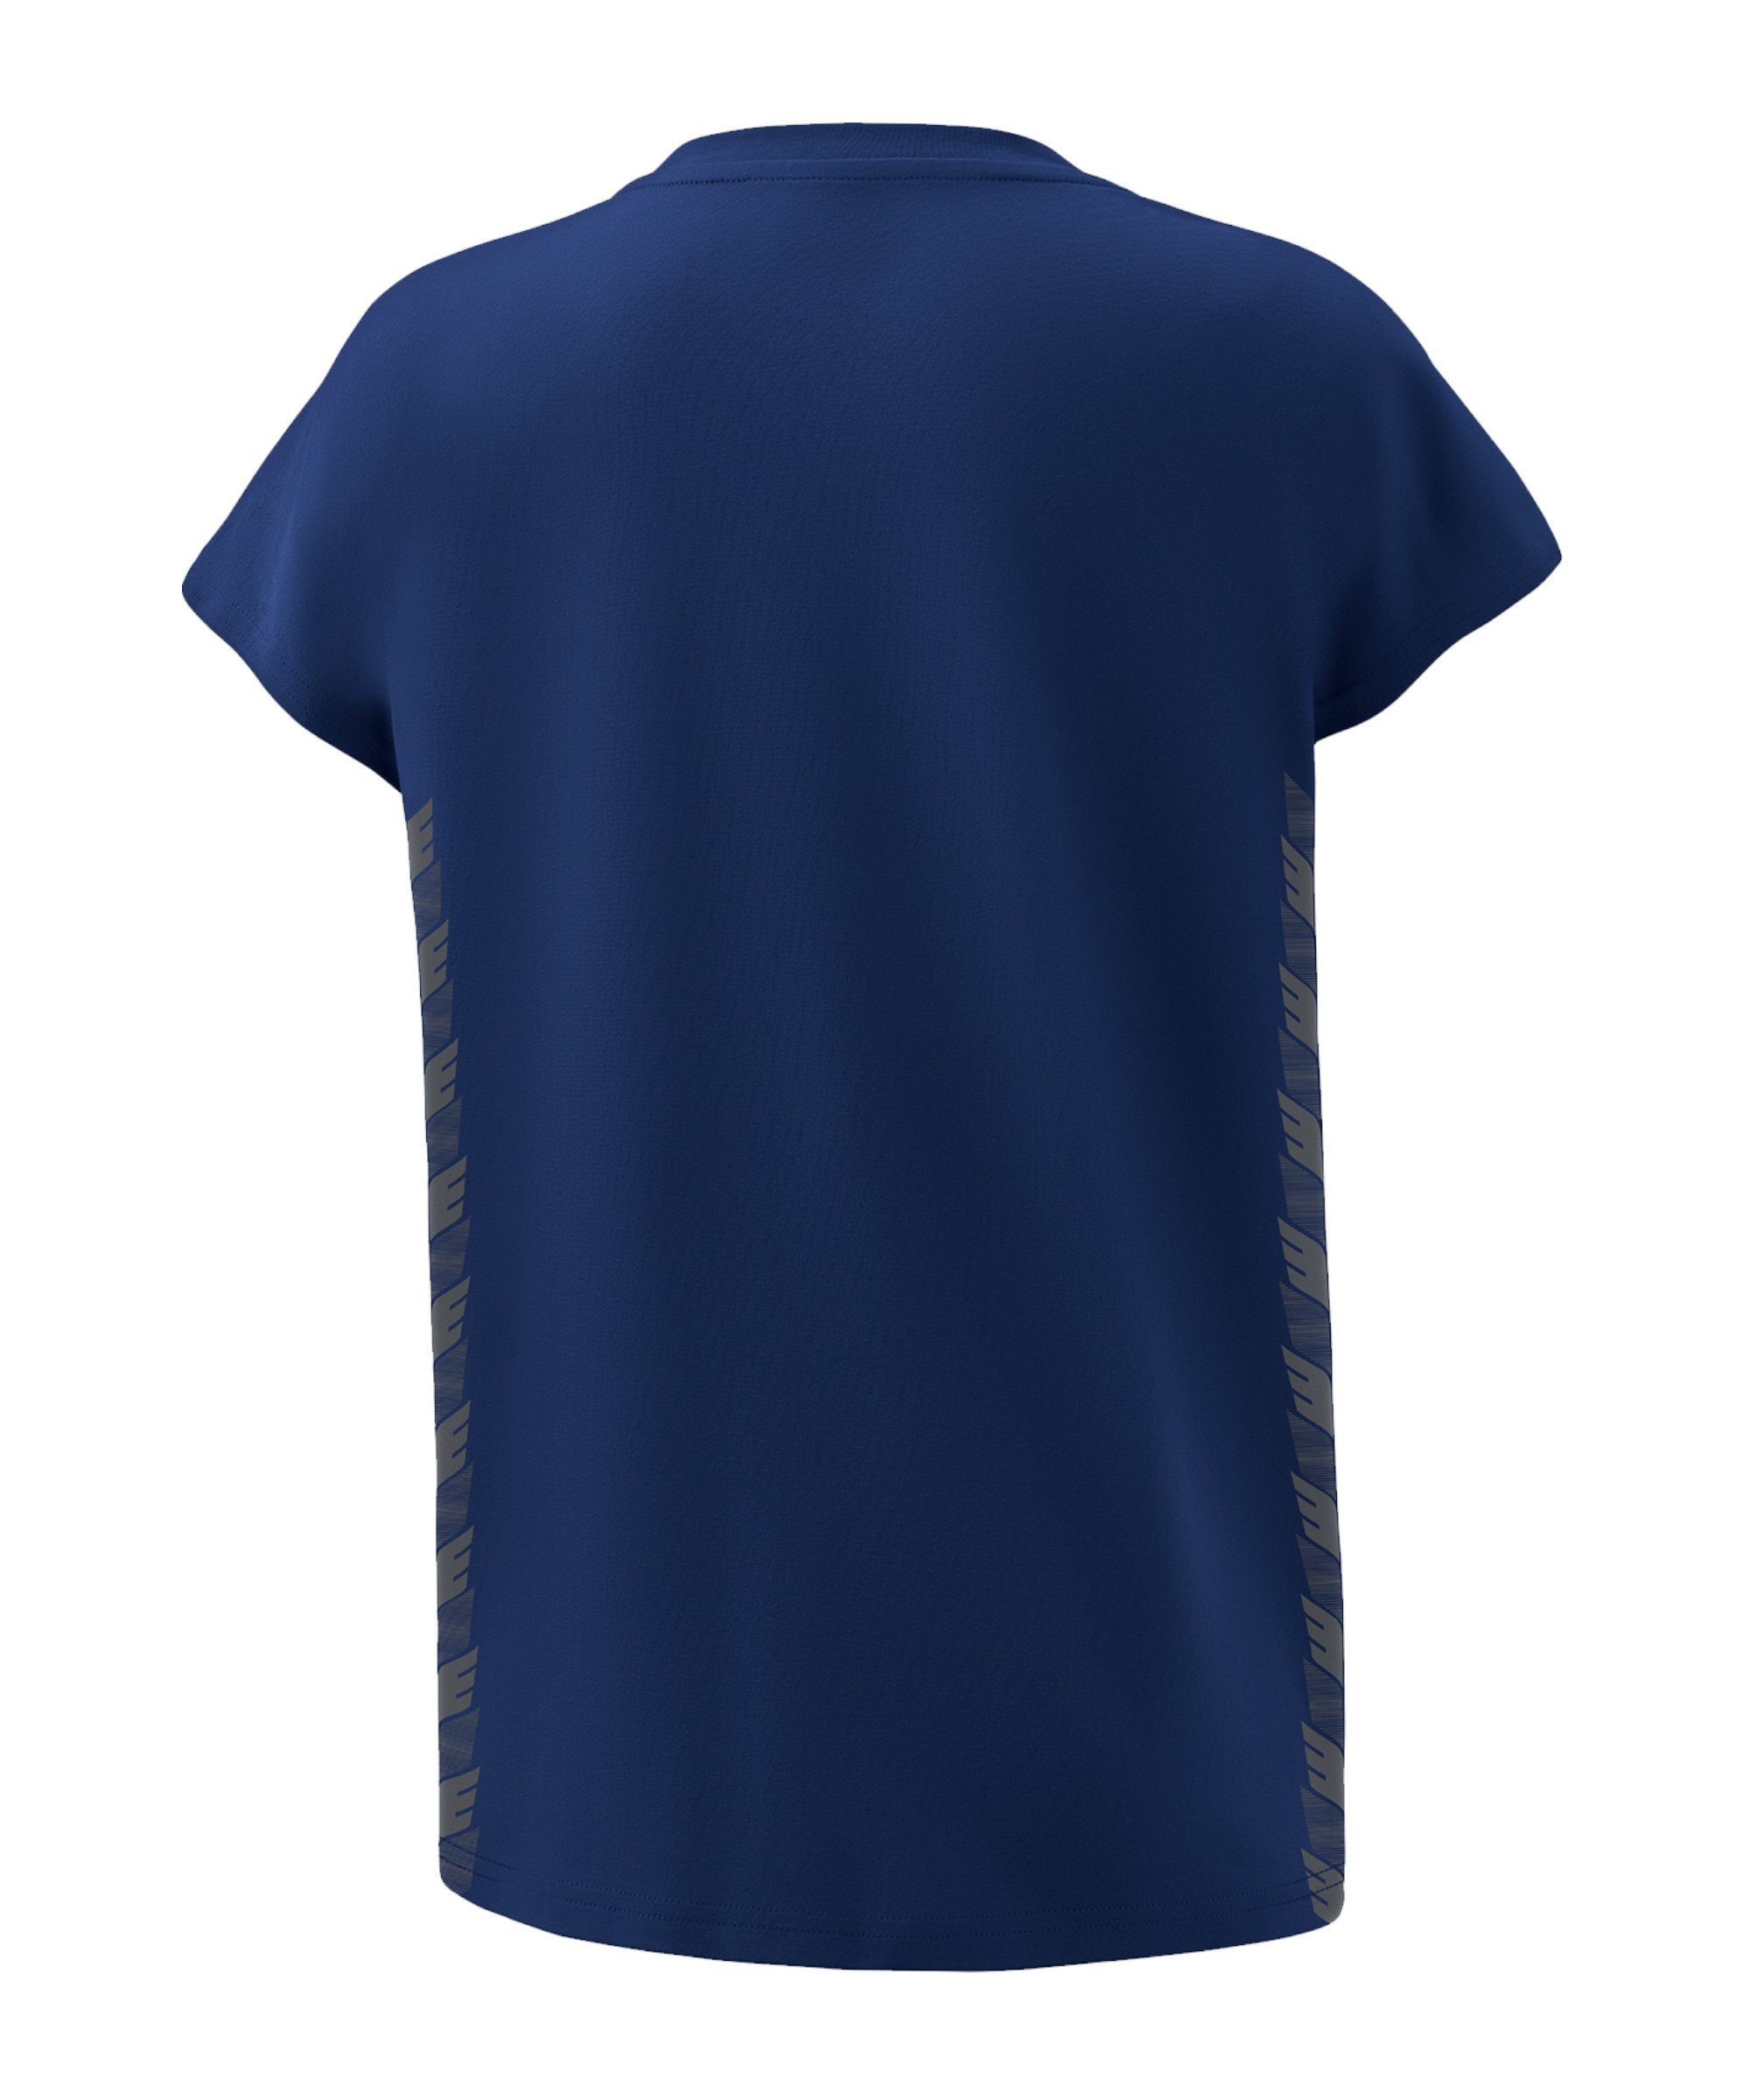 blau default Essential T-Shirt Damen T-Shirt Team Erima